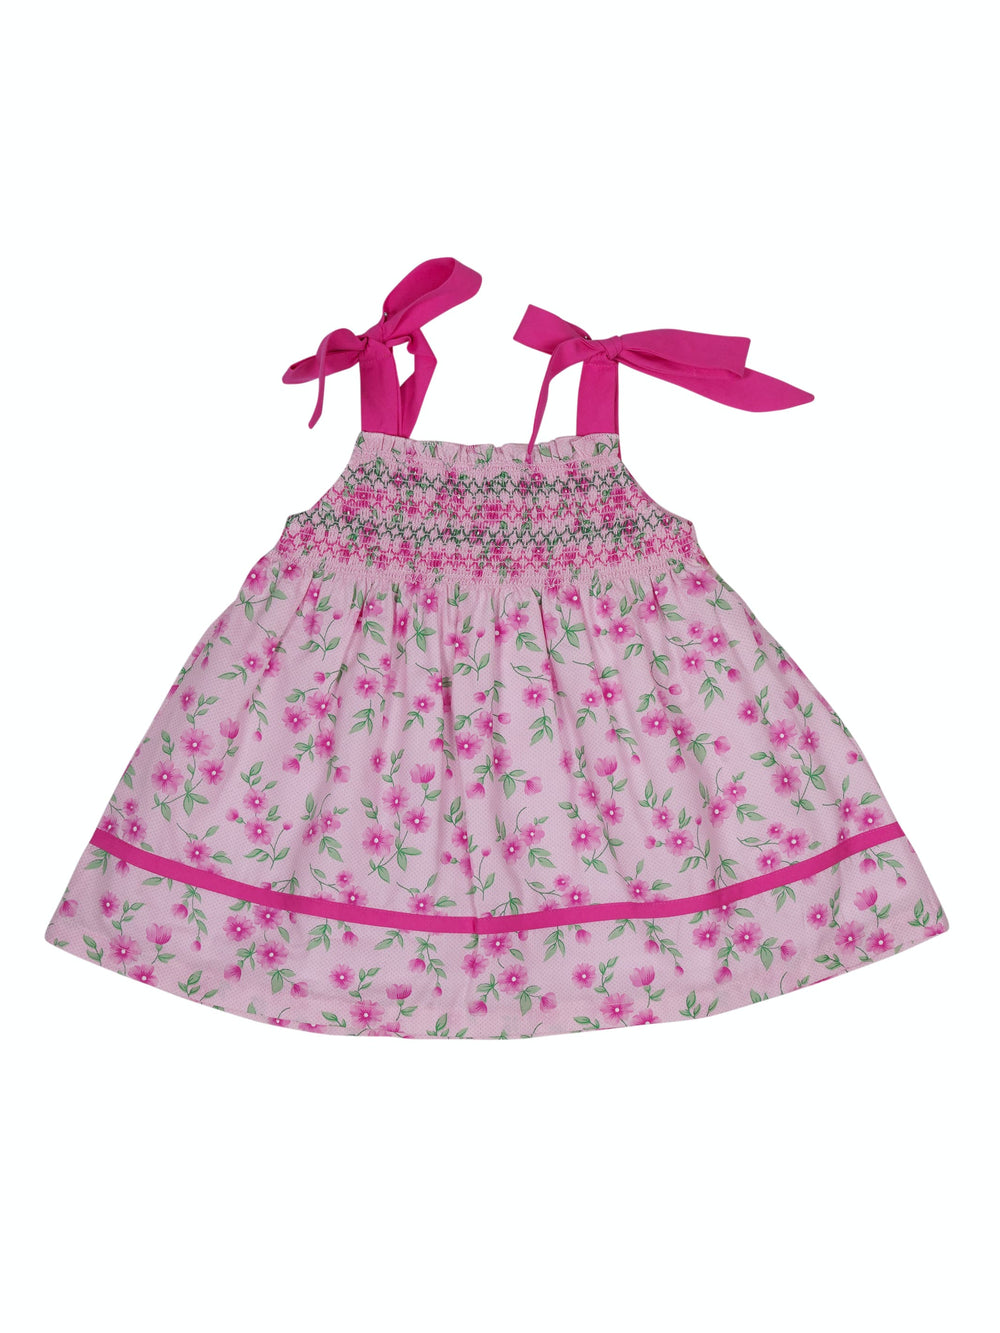 The Nesavu Frocks & Dresses Pink Tie-Up Soft Cotton Gown For Baby Girls psr silks Nesavu